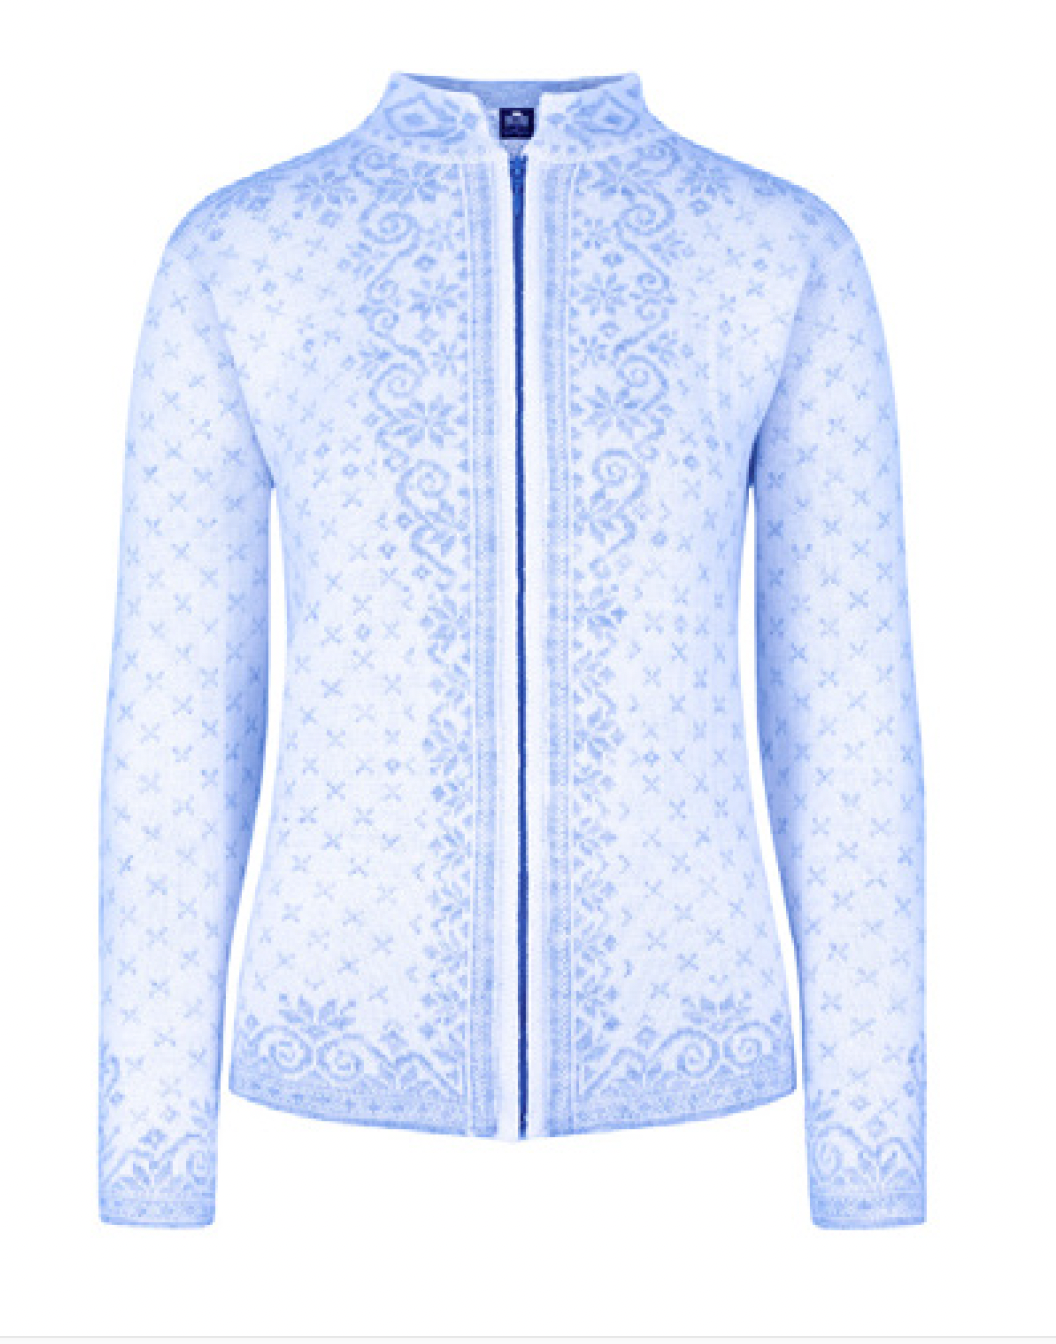 Sweater: Eva Wool Cardigan Off-White-Blue